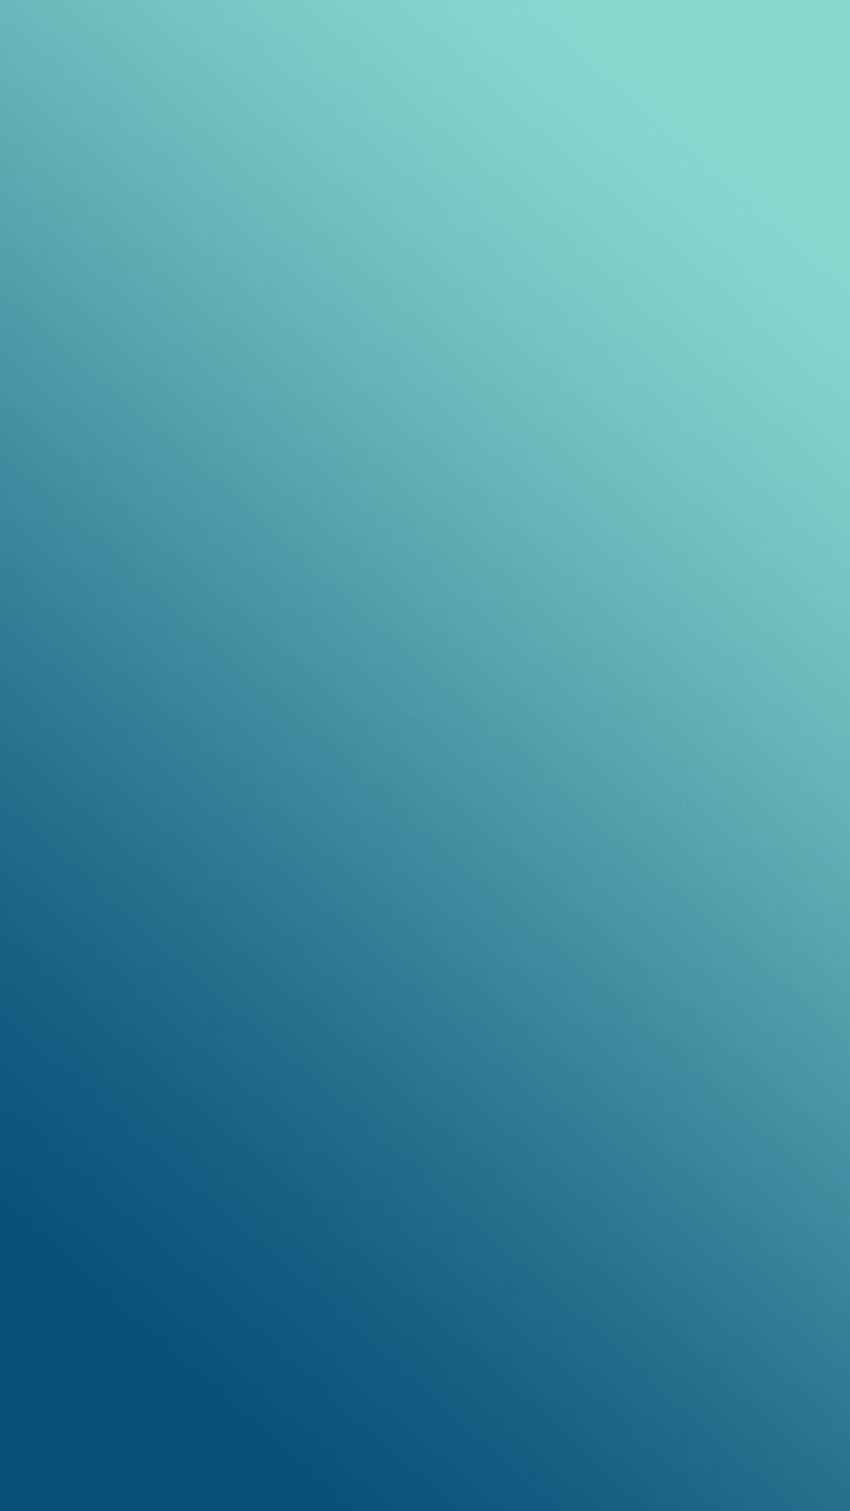 Azul turquesa, color turquesa. fondo de pantalla del teléfono